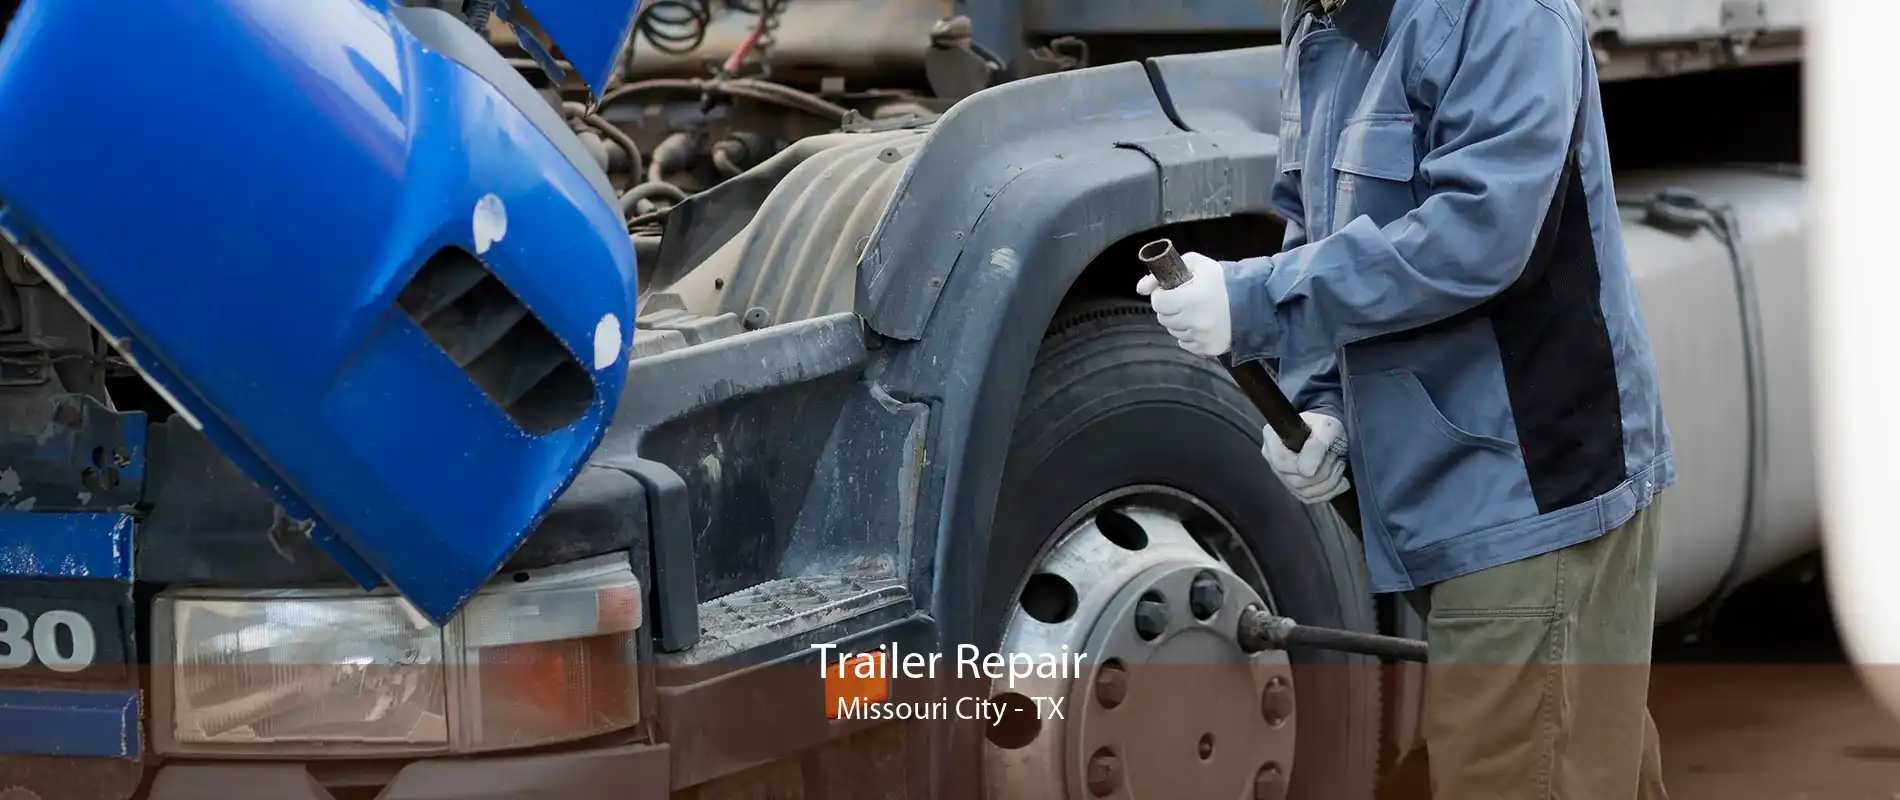 Trailer Repair Missouri City - TX